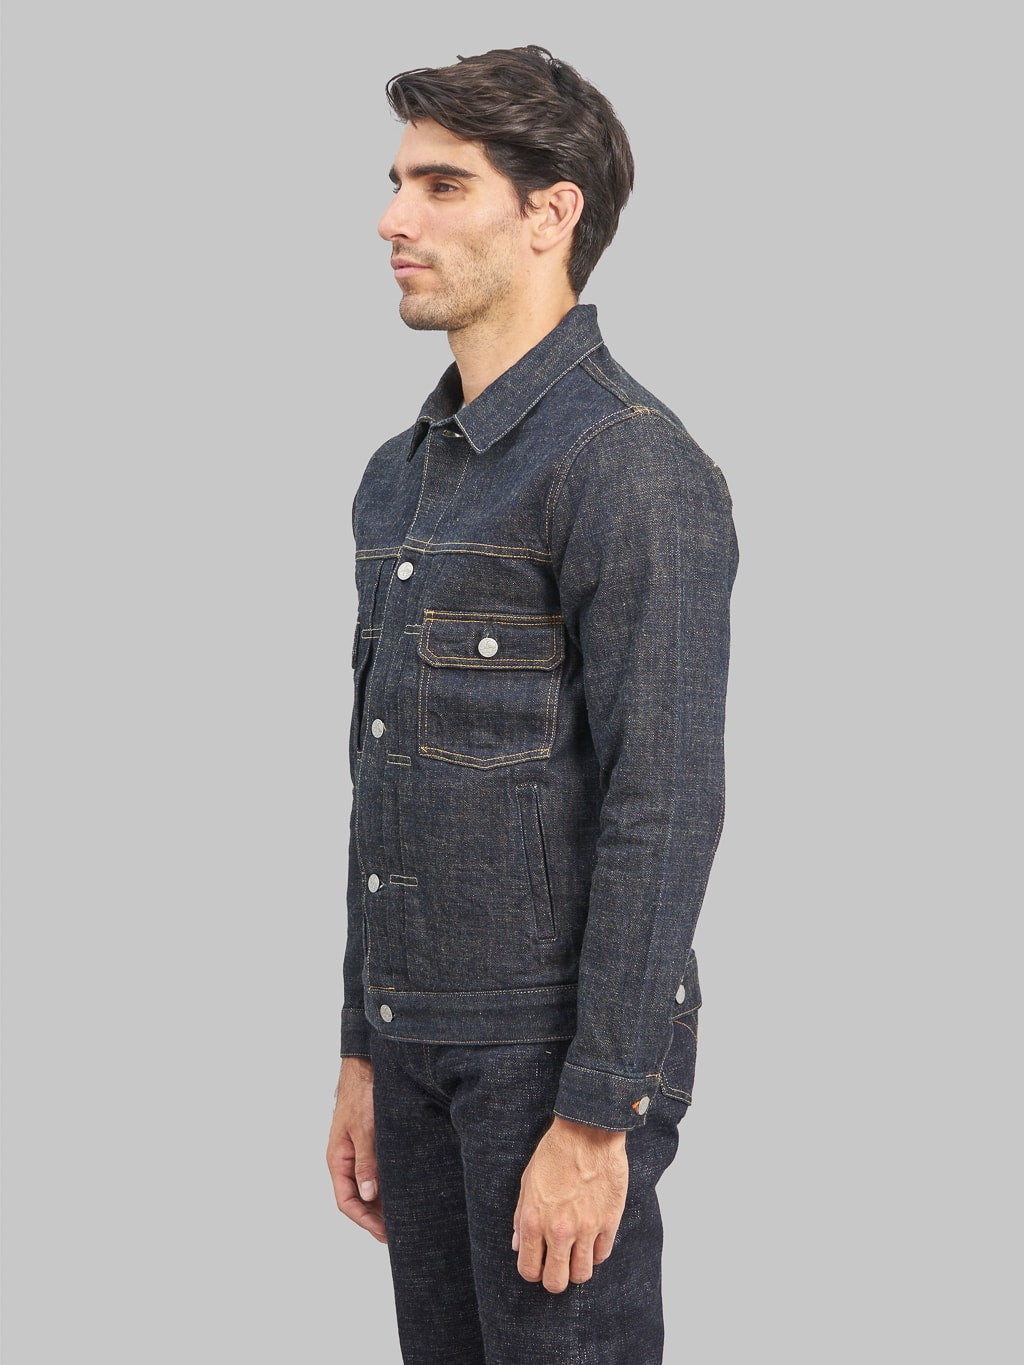 Tanuki soga selvedge denim type II jacket side fit